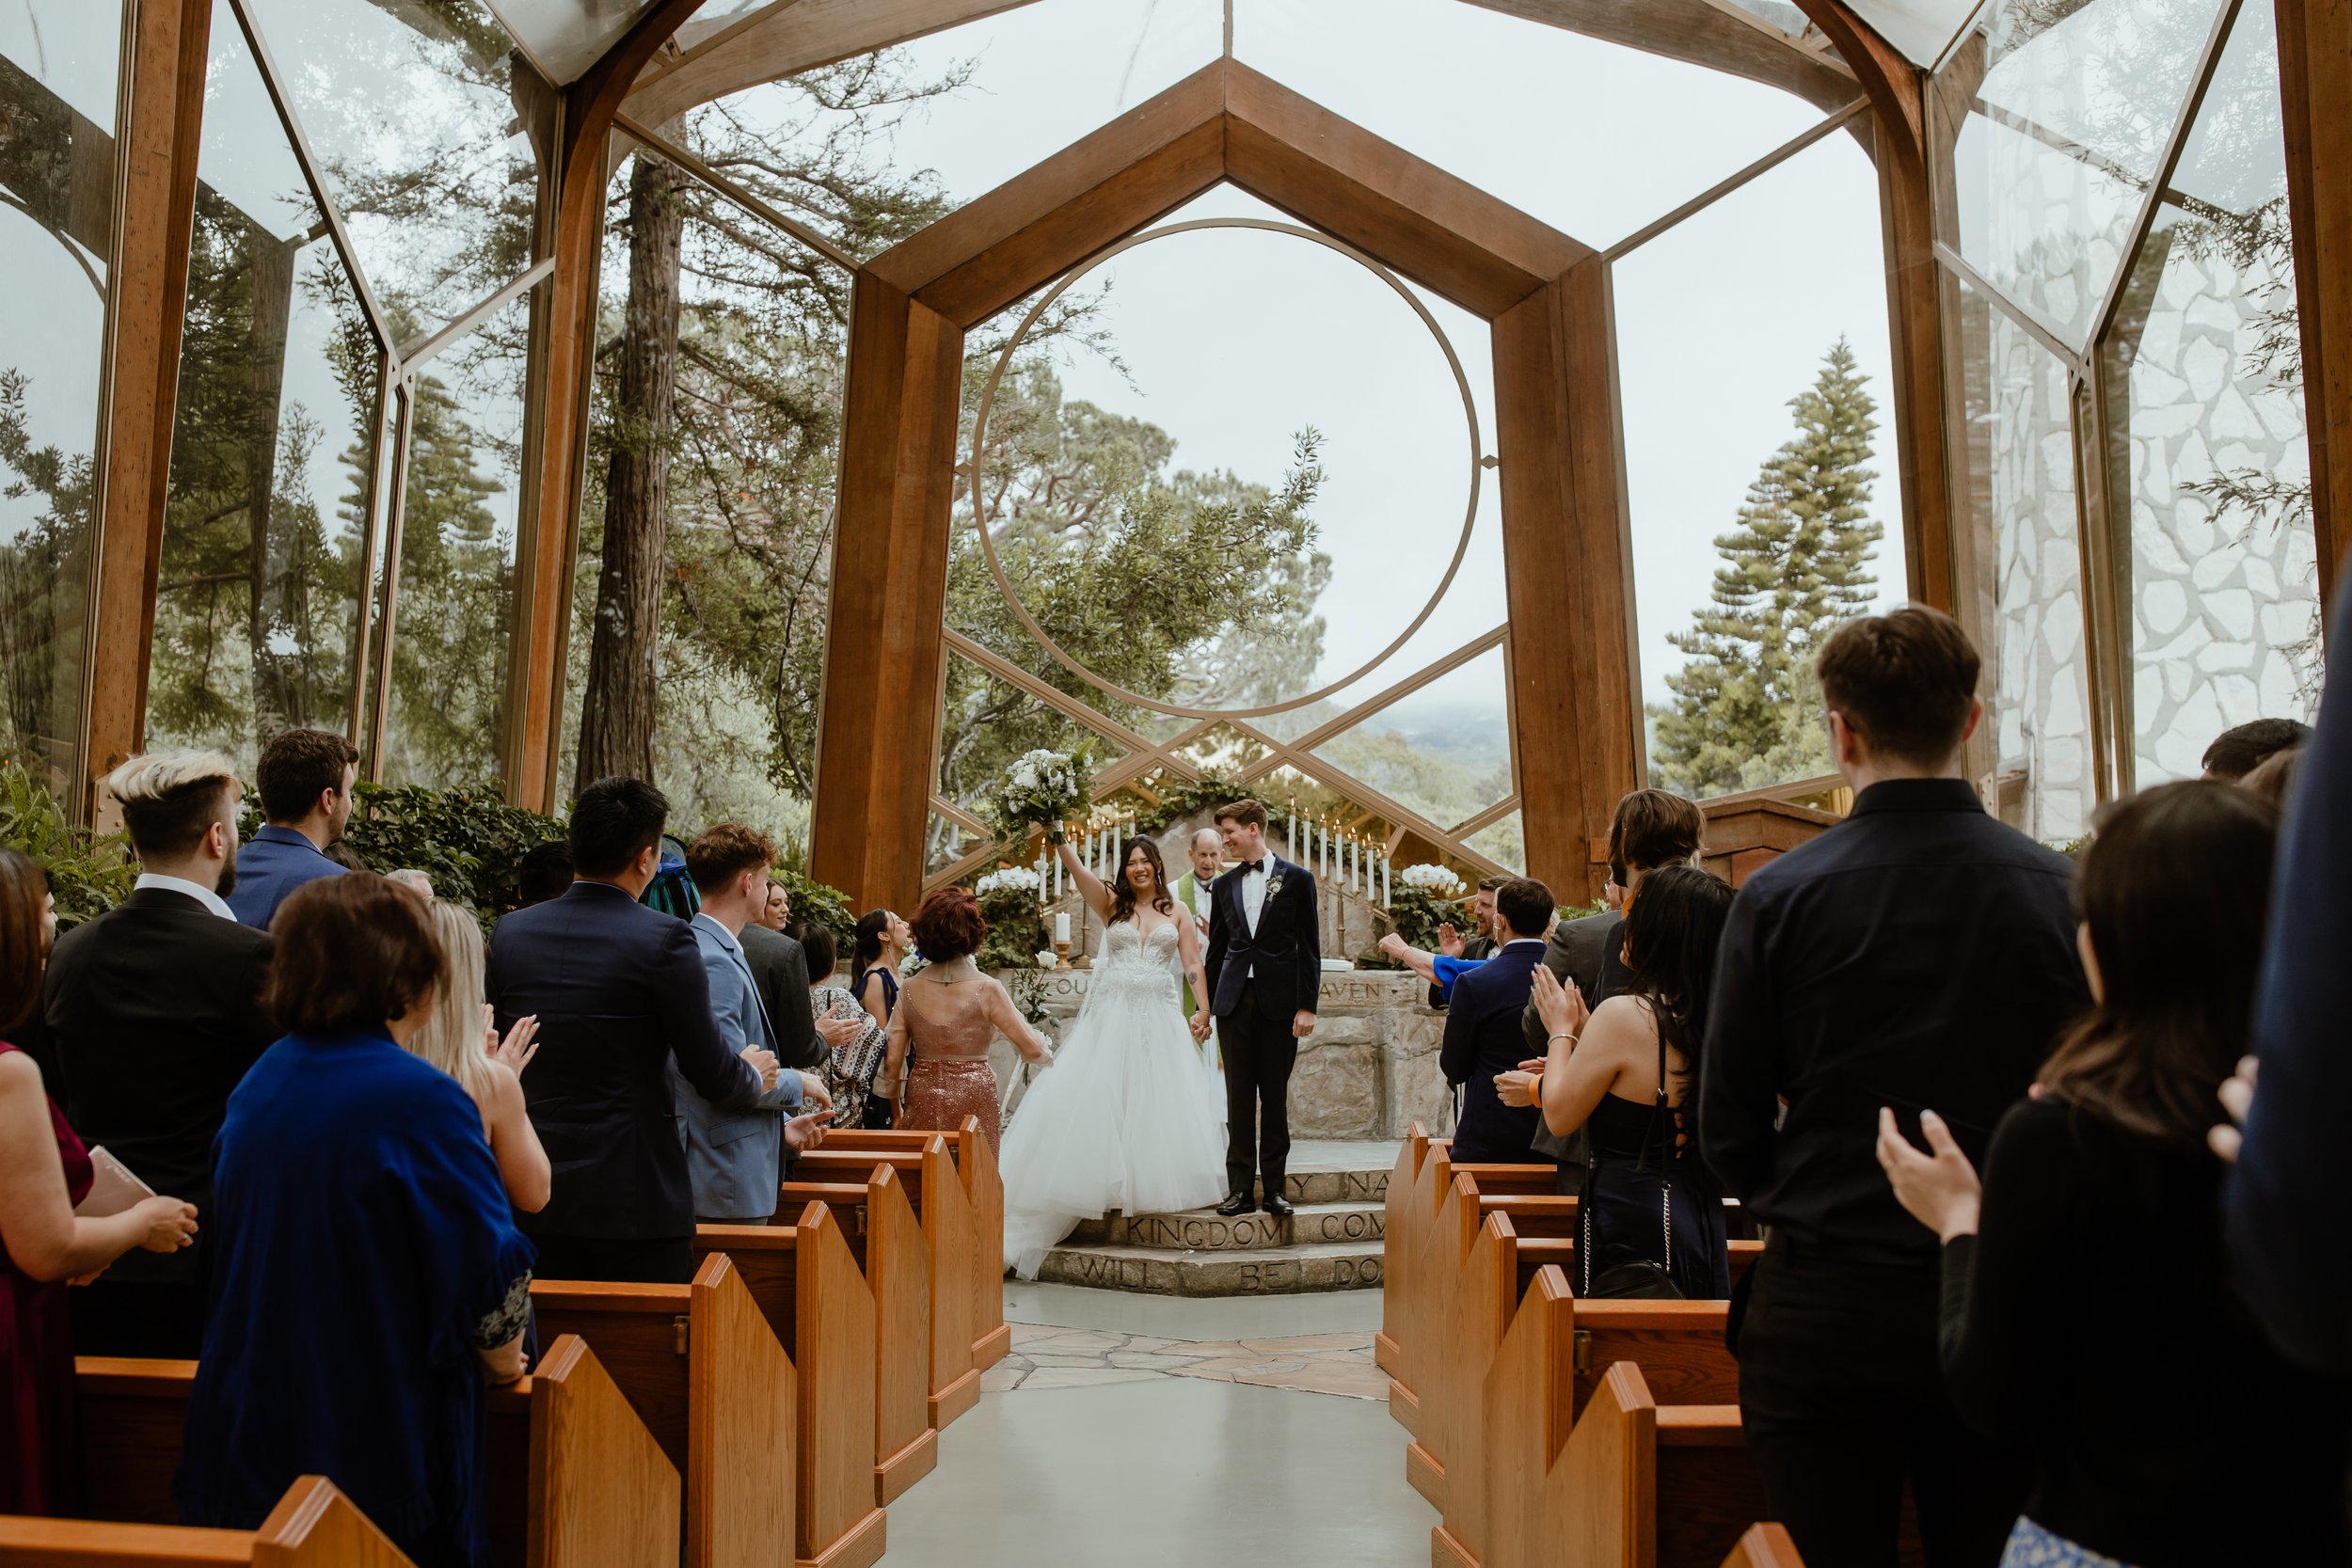  Sabrina and Scott's Wedding at Wayfarer's Chapel Palos Verdes - Eve Rox Photography 